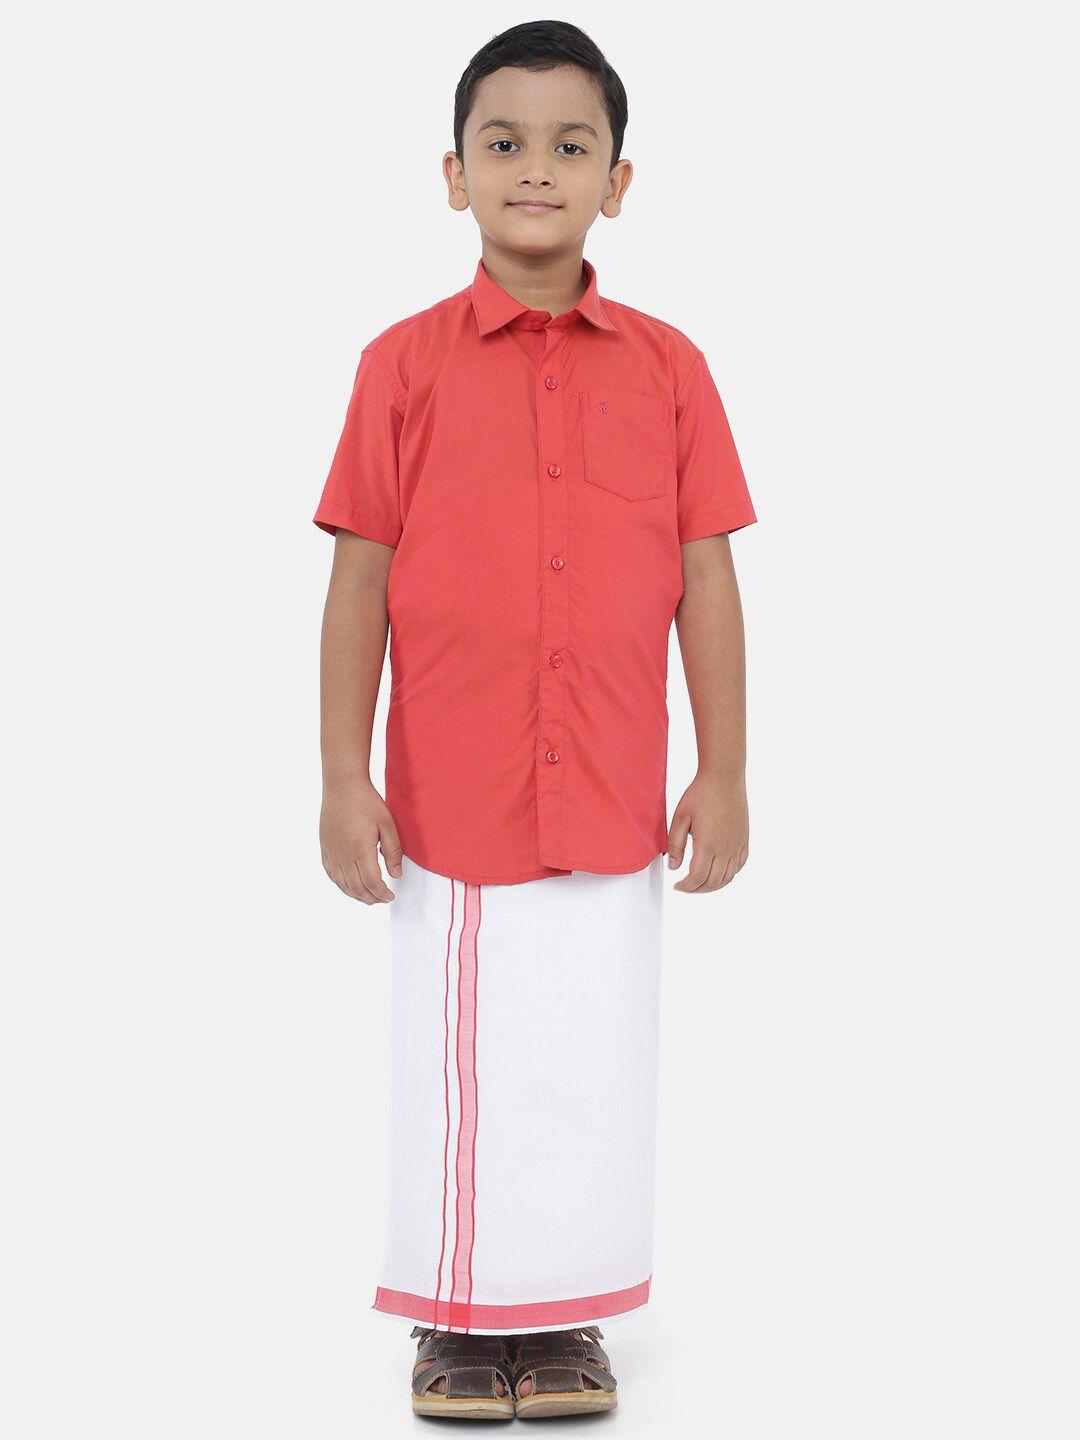 littlestars boys red & white shirt with dhoti pants